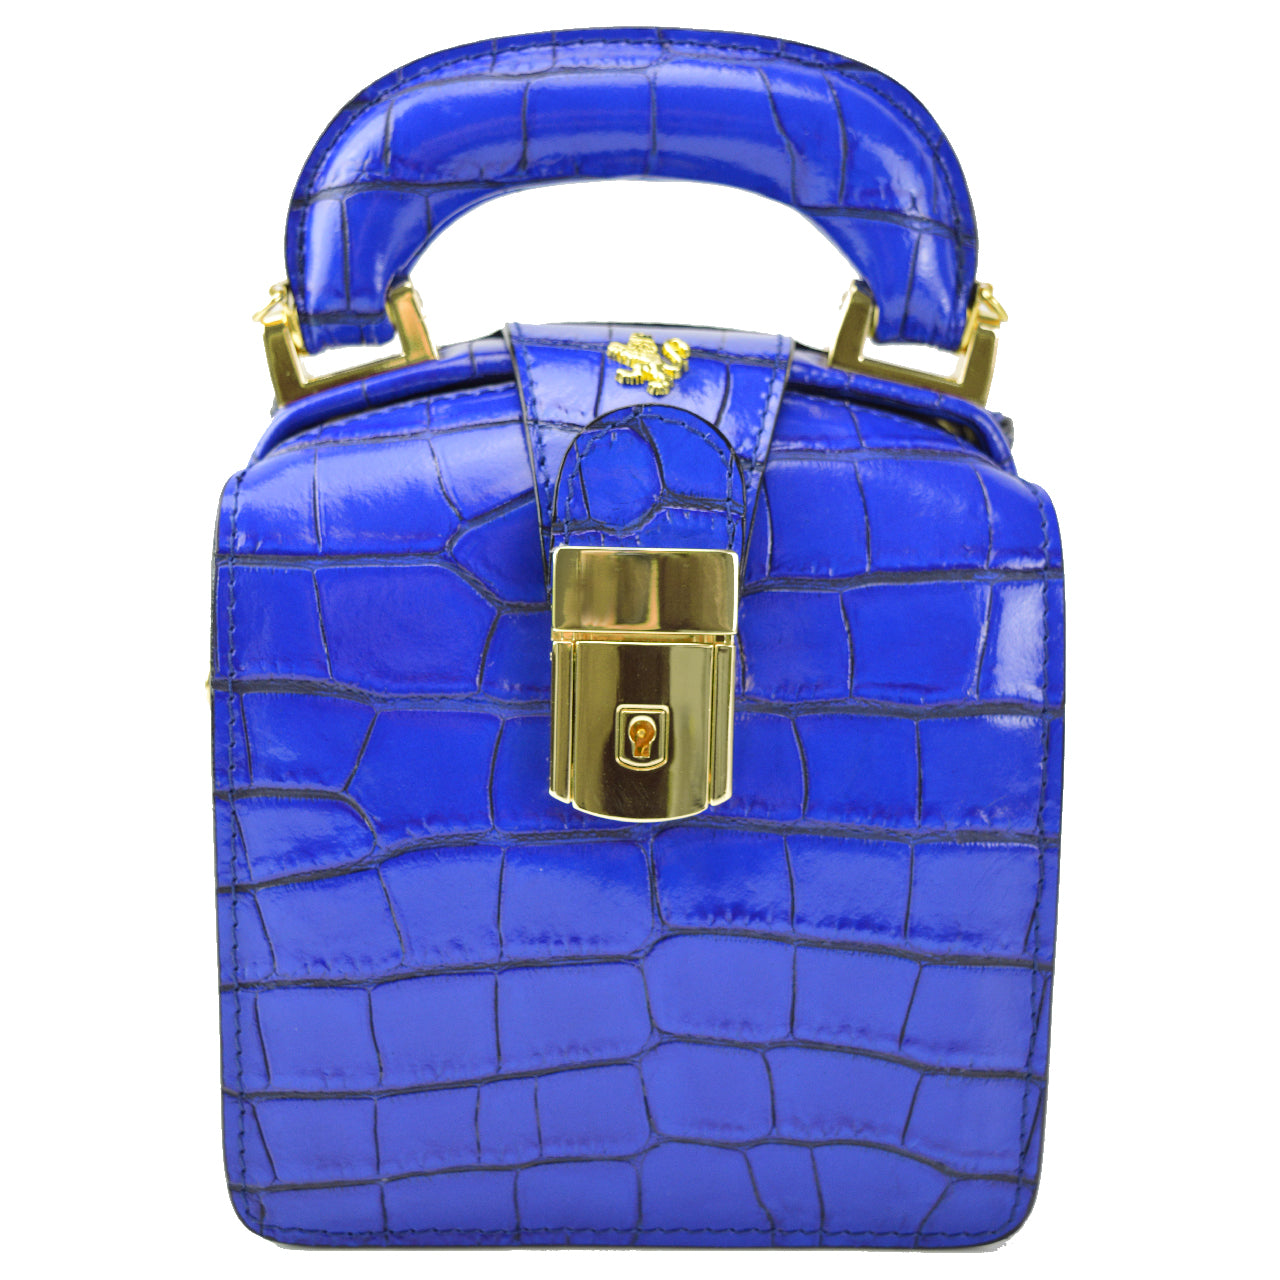 Pratesi Brunelleschi Handbag in genuine Italian leather - Brunelleschi Electric Blue